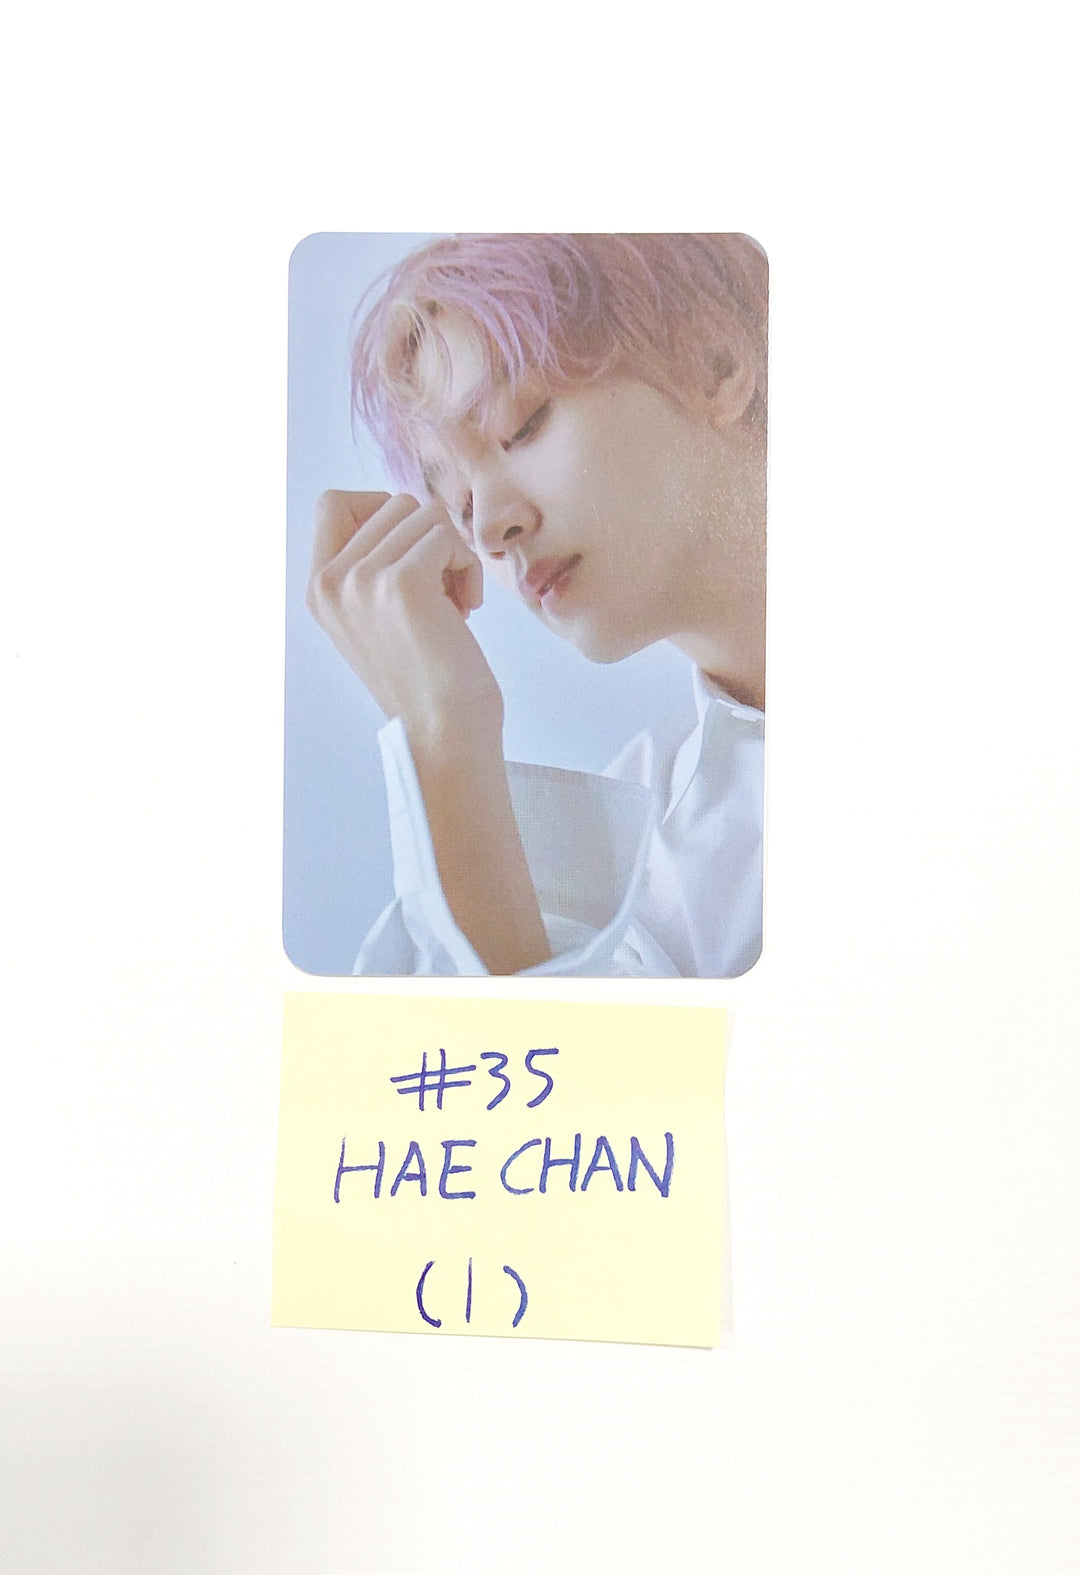 NCT DREAM "STARRY DAYDREAM" - Smtown Store Random Dream Photocard (Restocked 3/14)